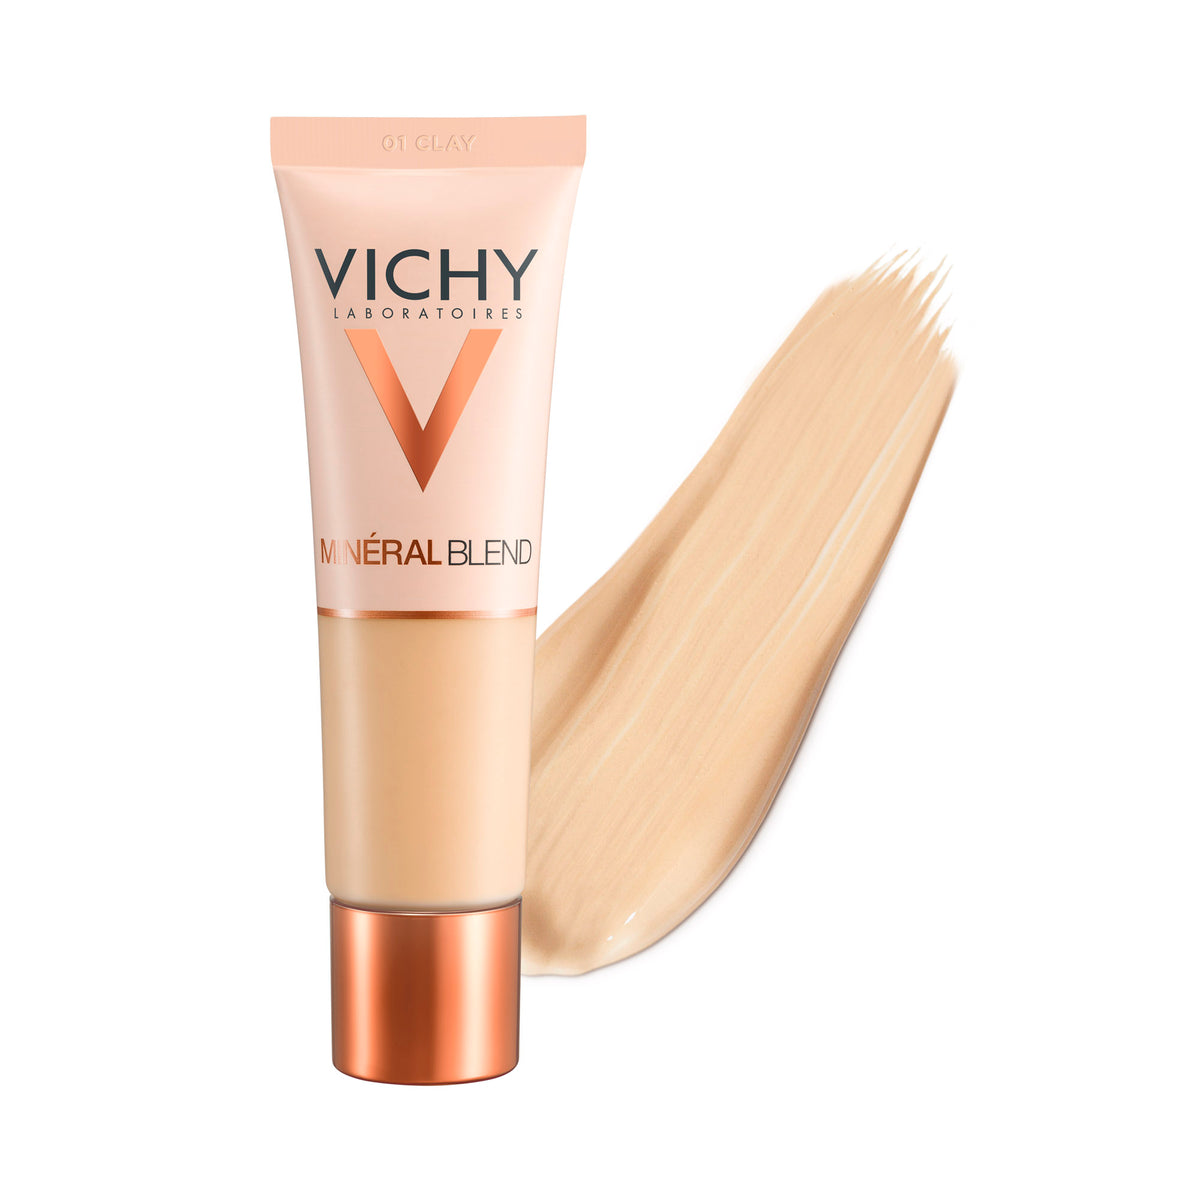 Vichy Mineralblend - 01 Clay